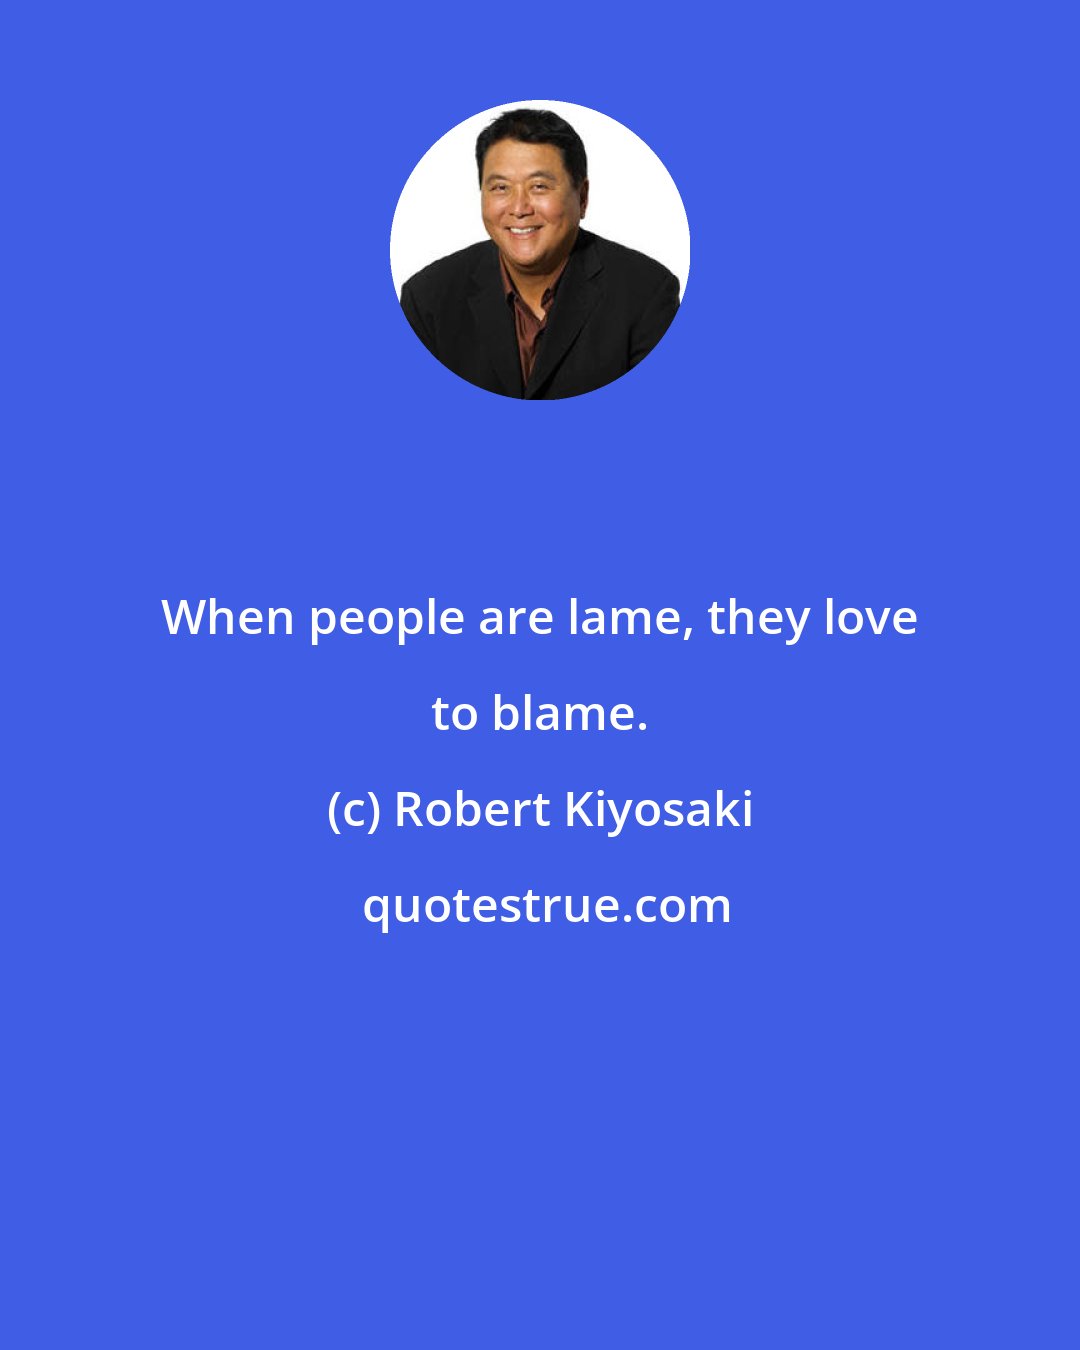 Robert Kiyosaki: When people are lame, they love to blame.